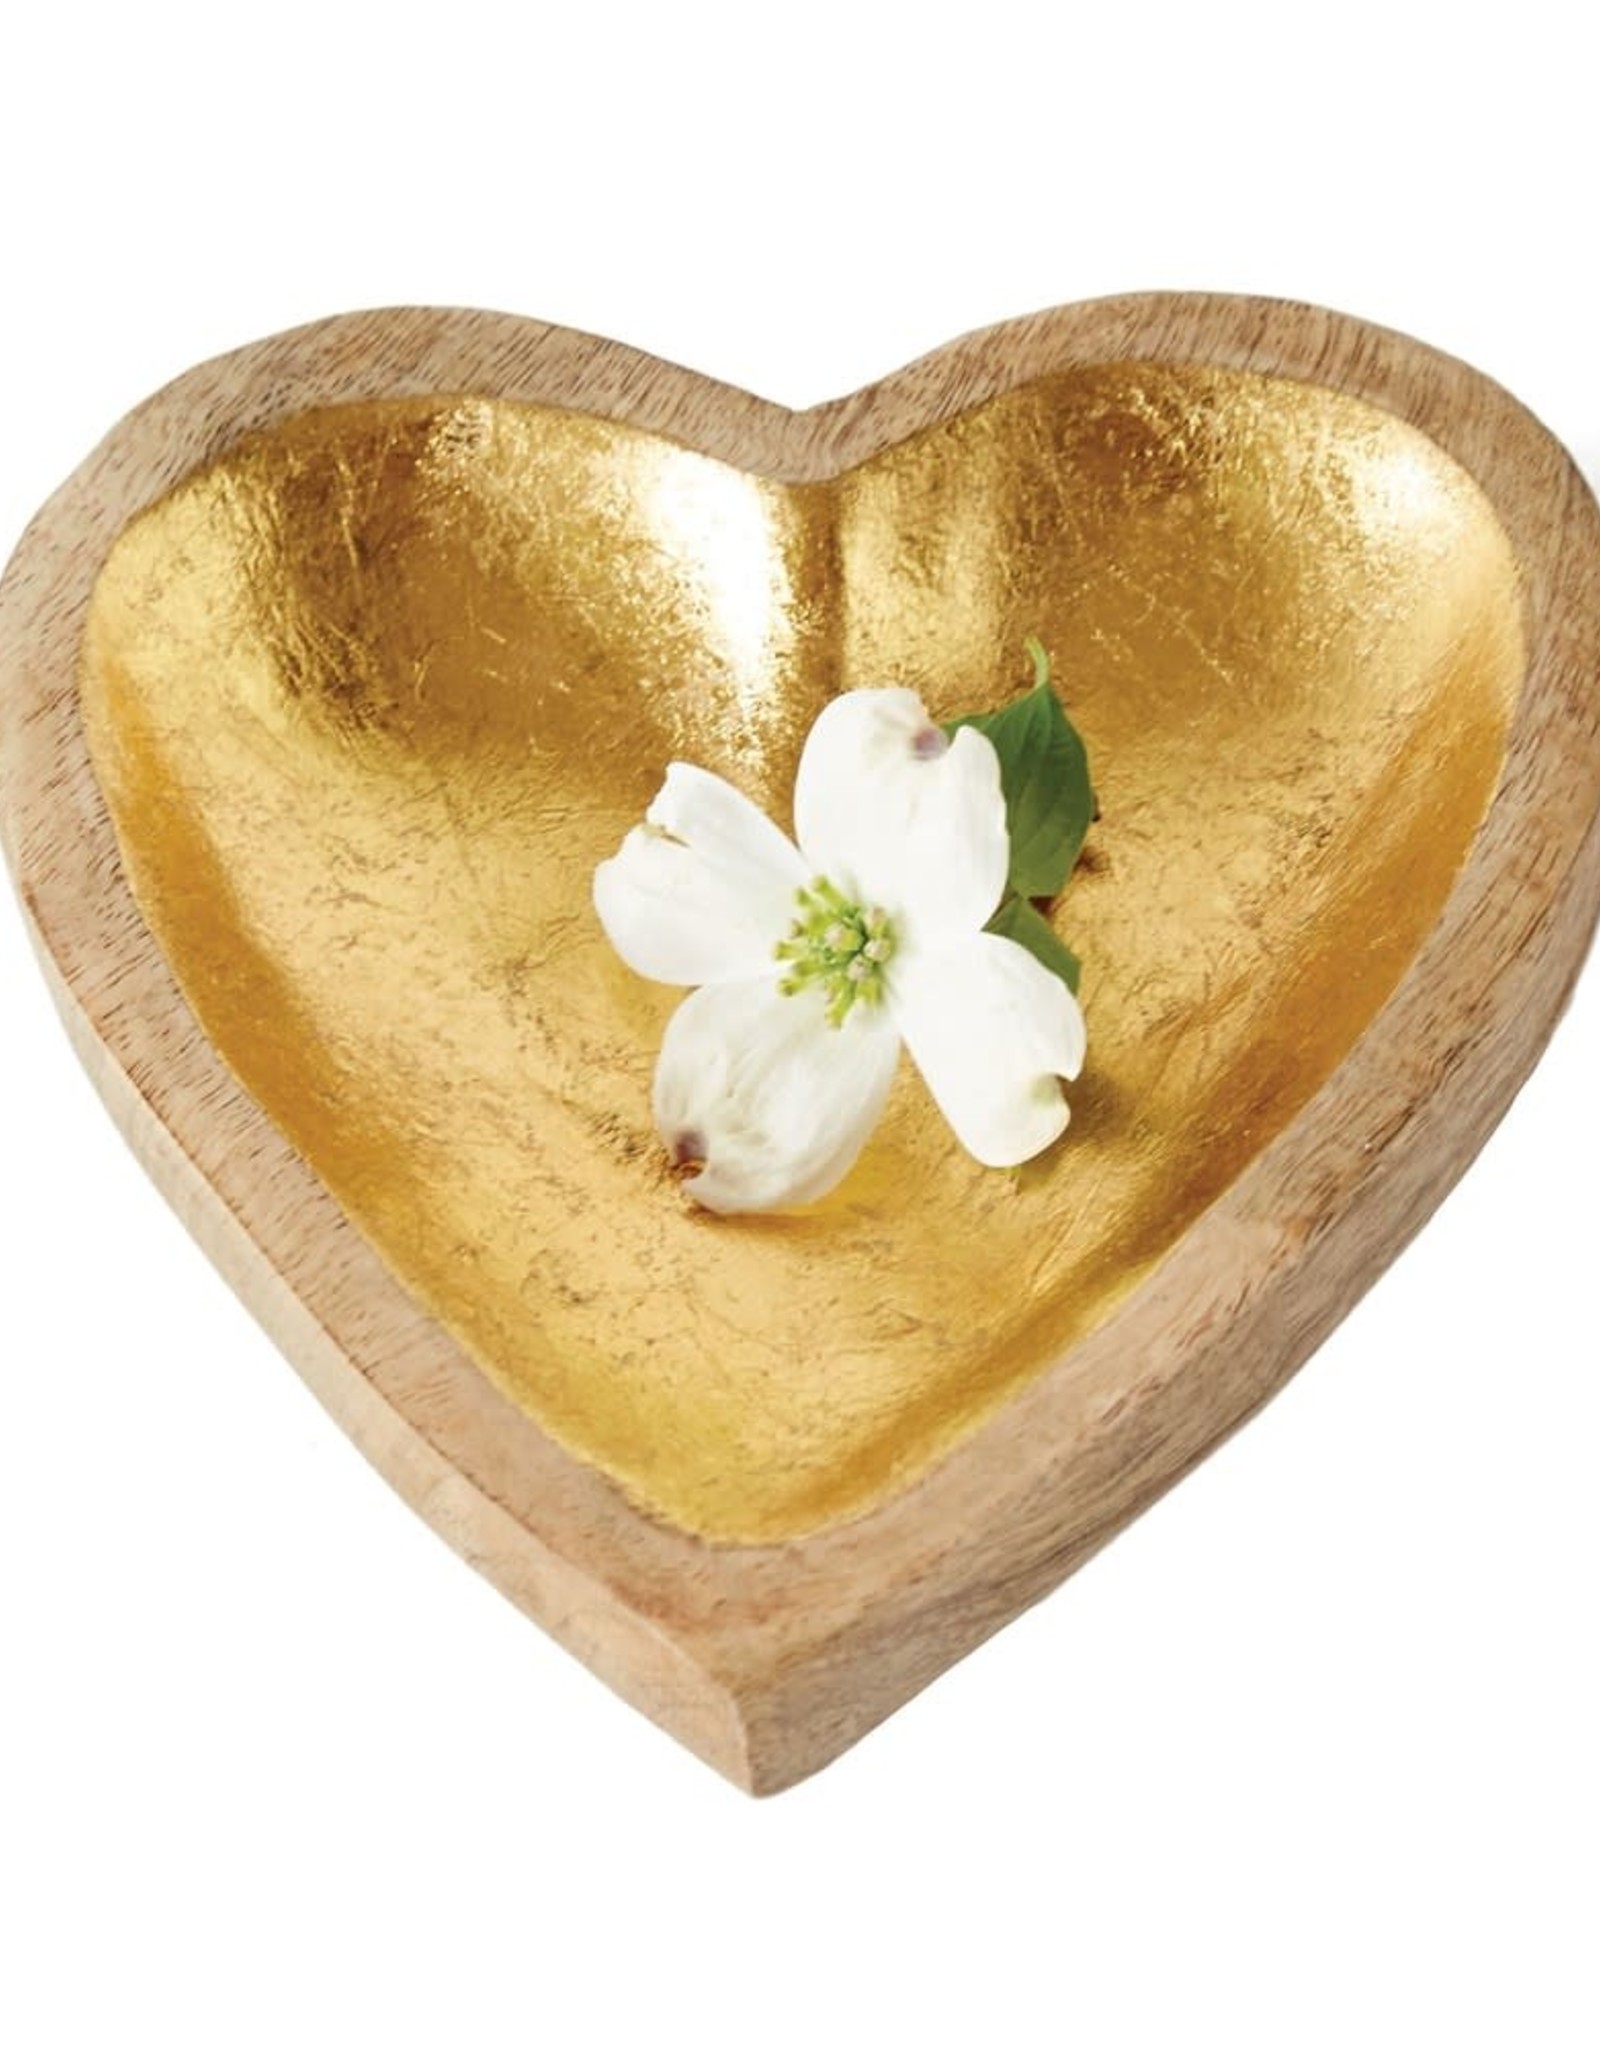 Love Heart Bowls BLUE MANGO WOOD Trinket Box Handmade Photo Frames Coasters 